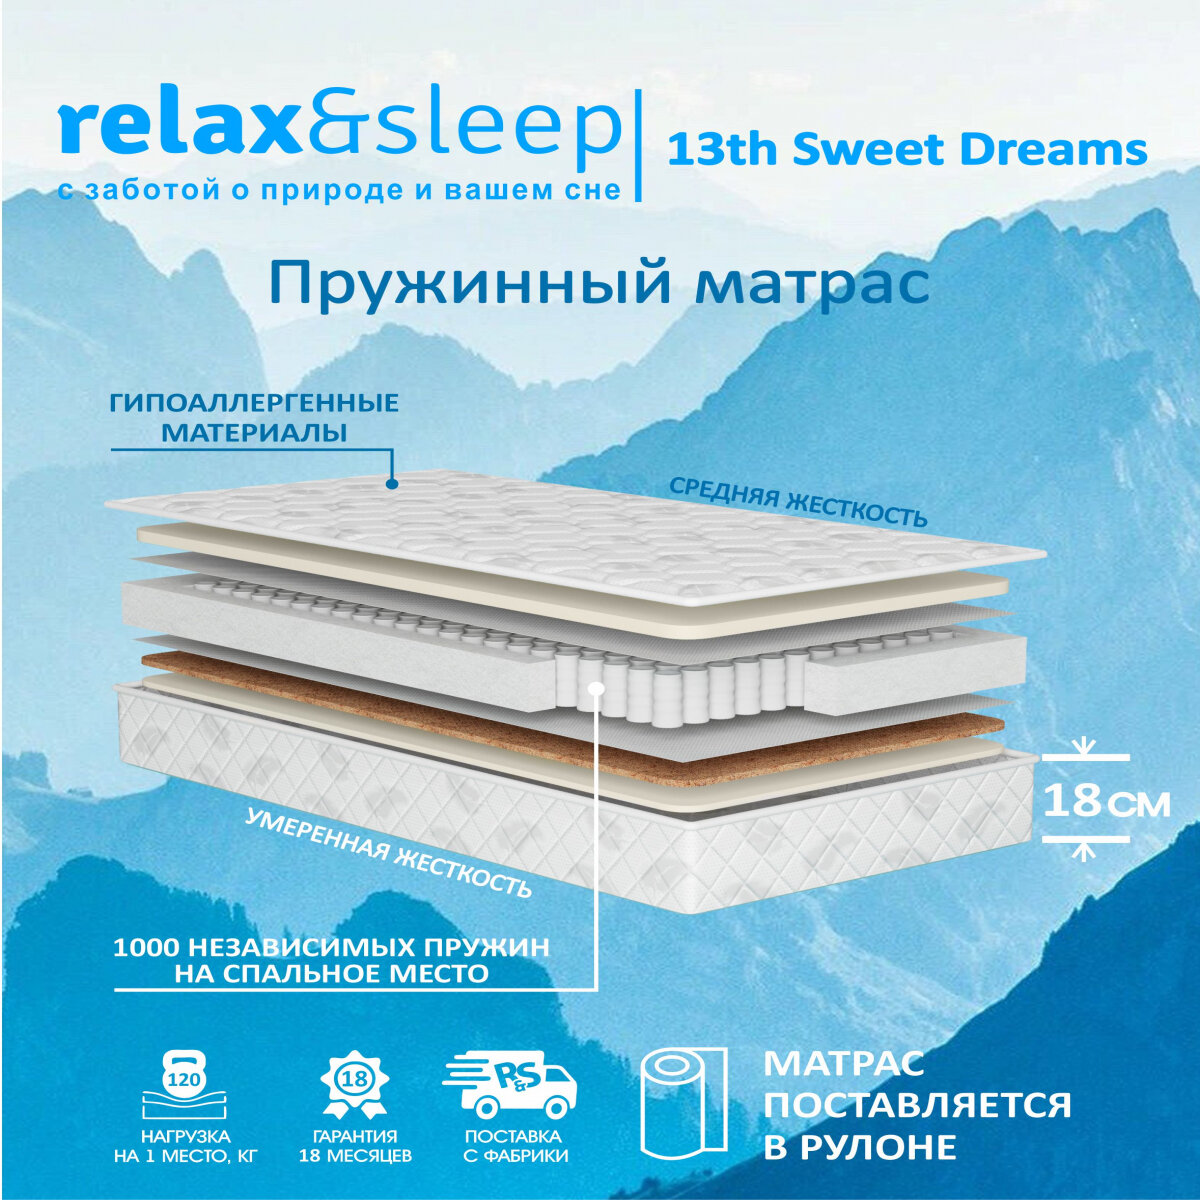 Матрас Relax&Sleep ортопедический пружинный 13th Sweet Dreams (60 / 190)